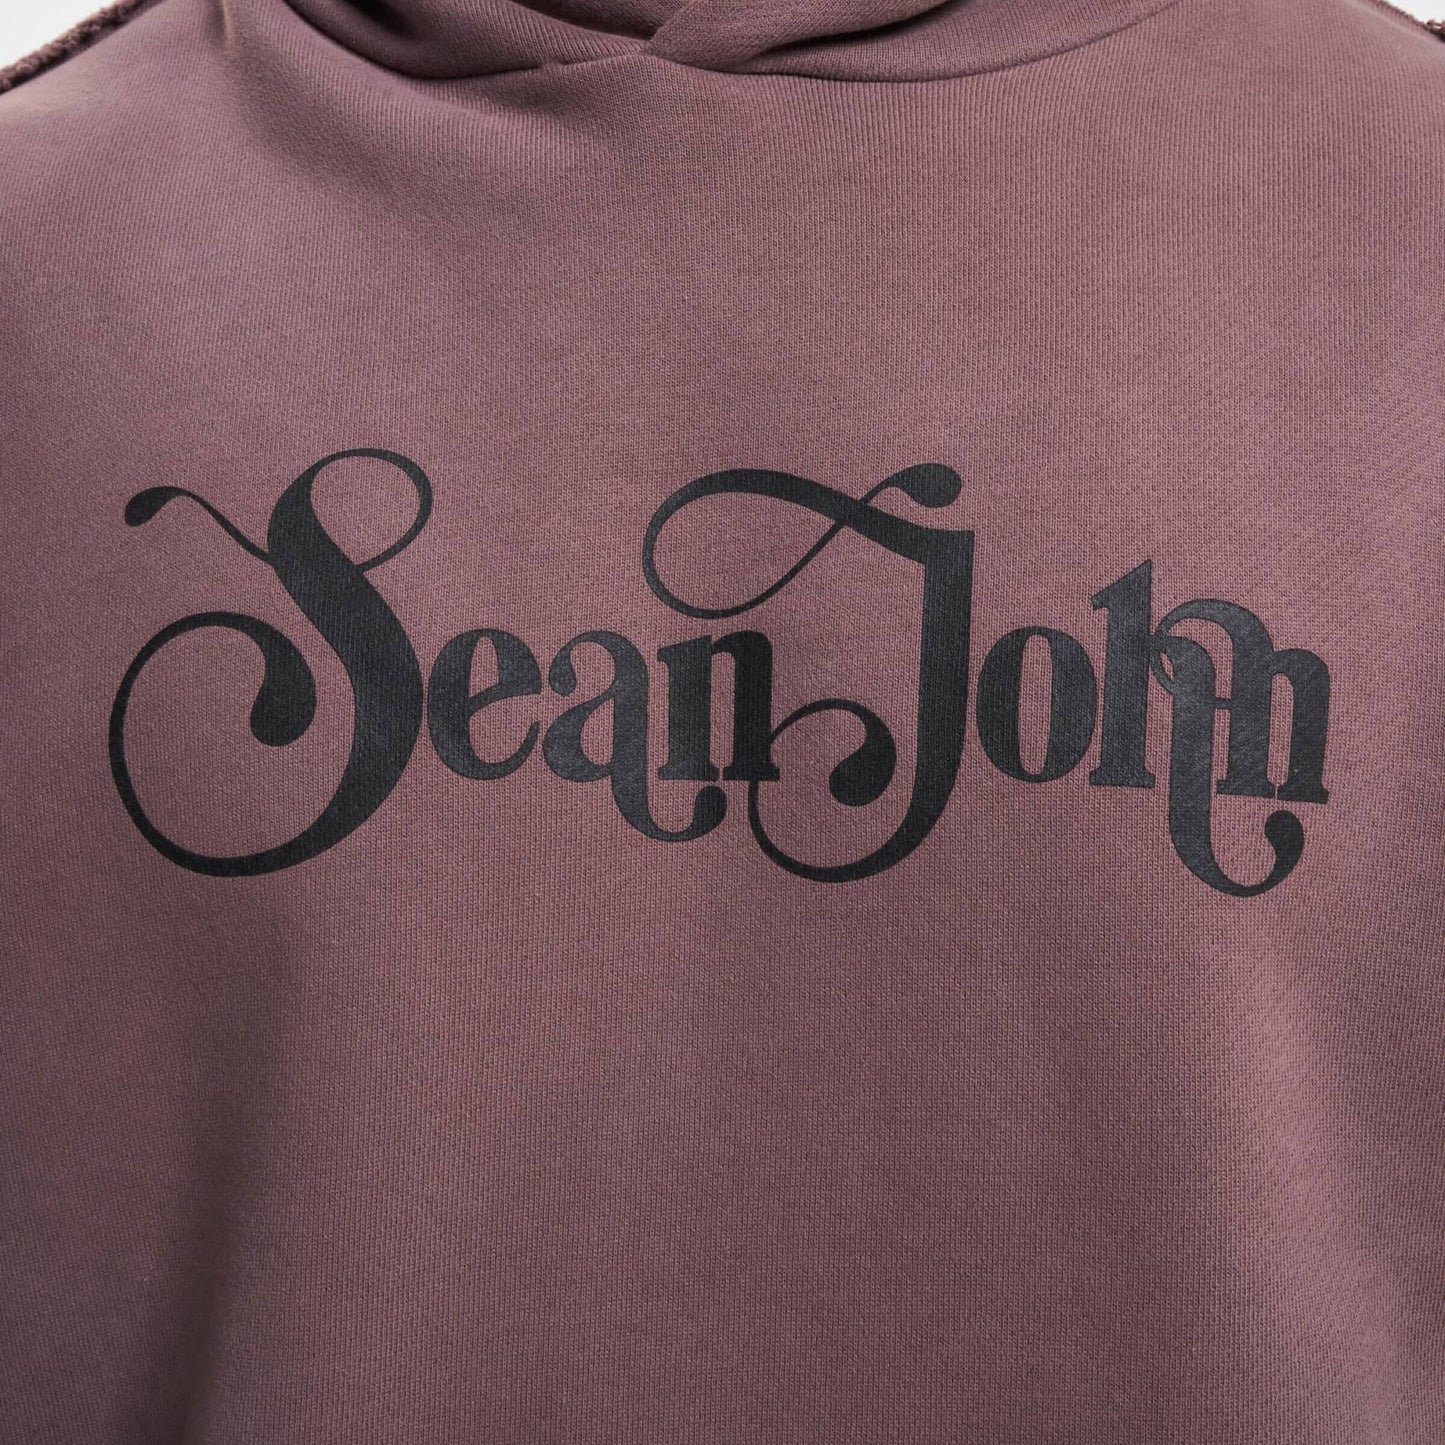 Sean John SJ Retro Logo Peached Hoodie dark taupe